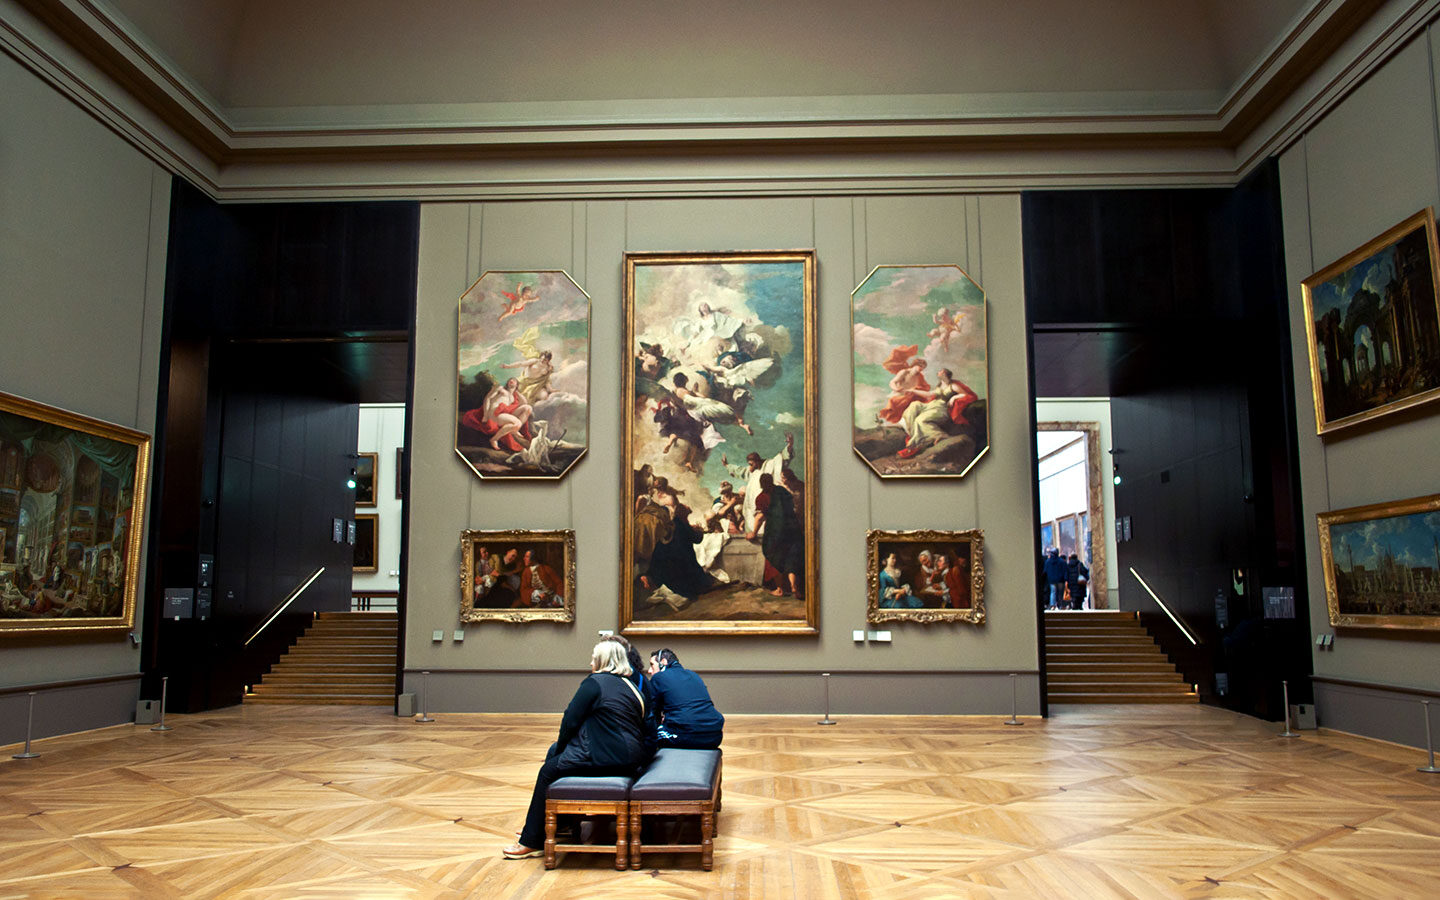 Admiring artworks in the Louvre gallery in Paris